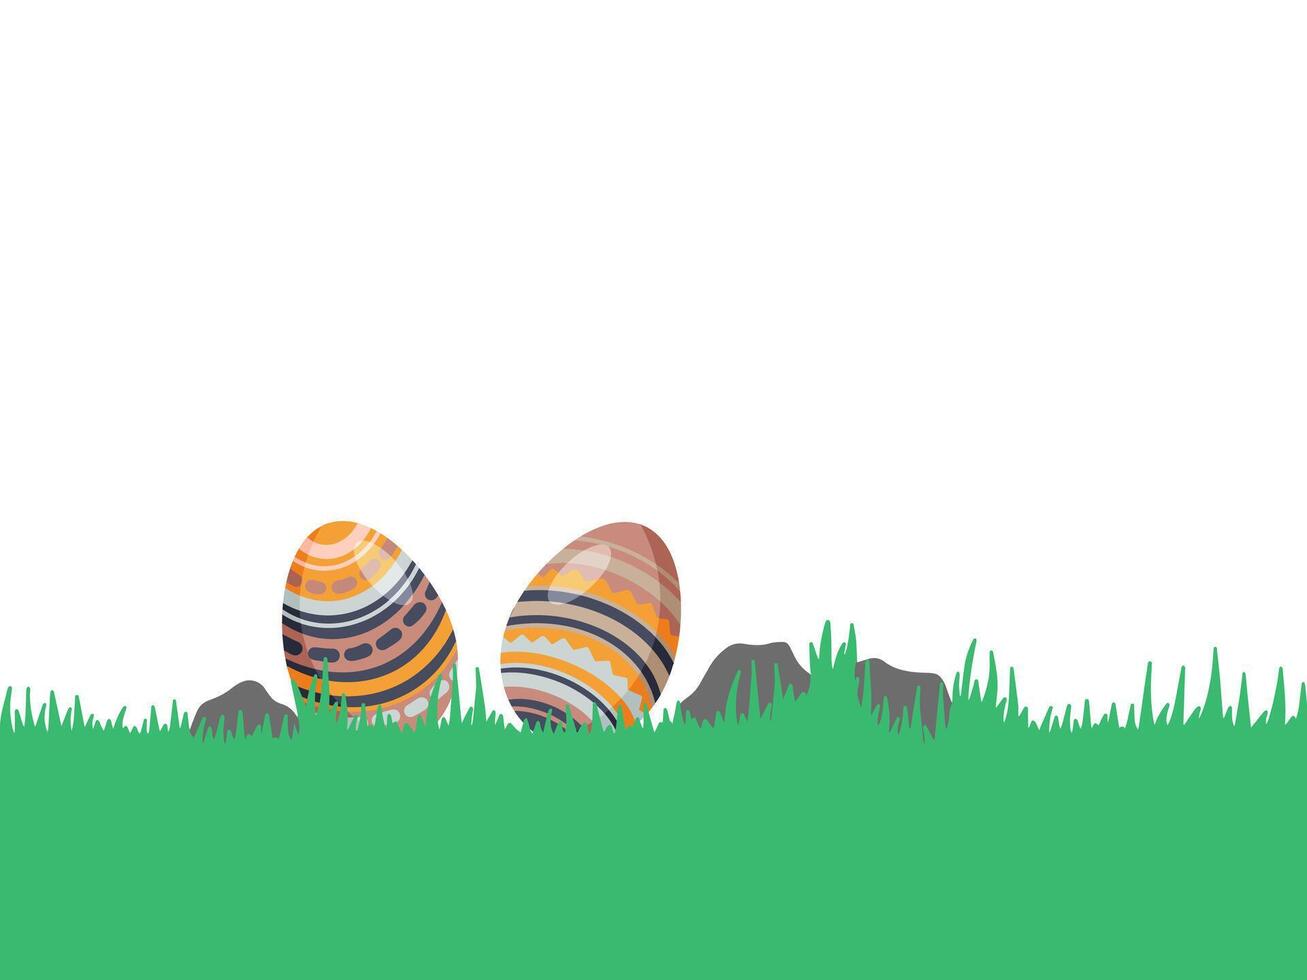 Easter Eggs in Green Grass vector